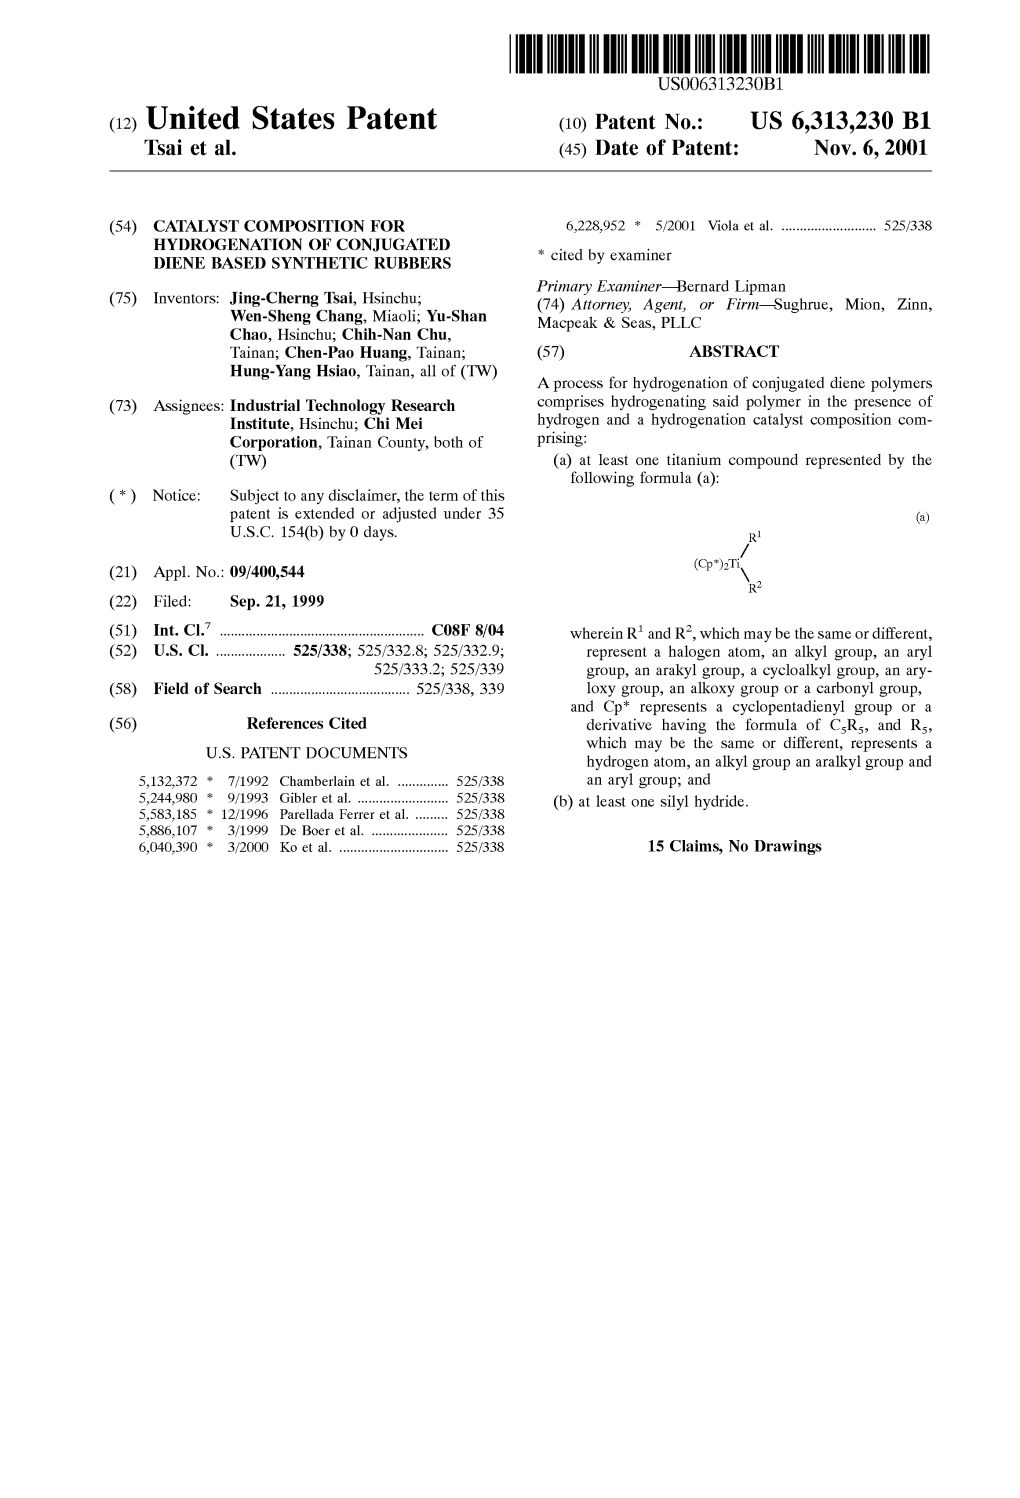 (12) United States Patent (10) Patent No.: US 6,313,230 B1 Tsai Et Al